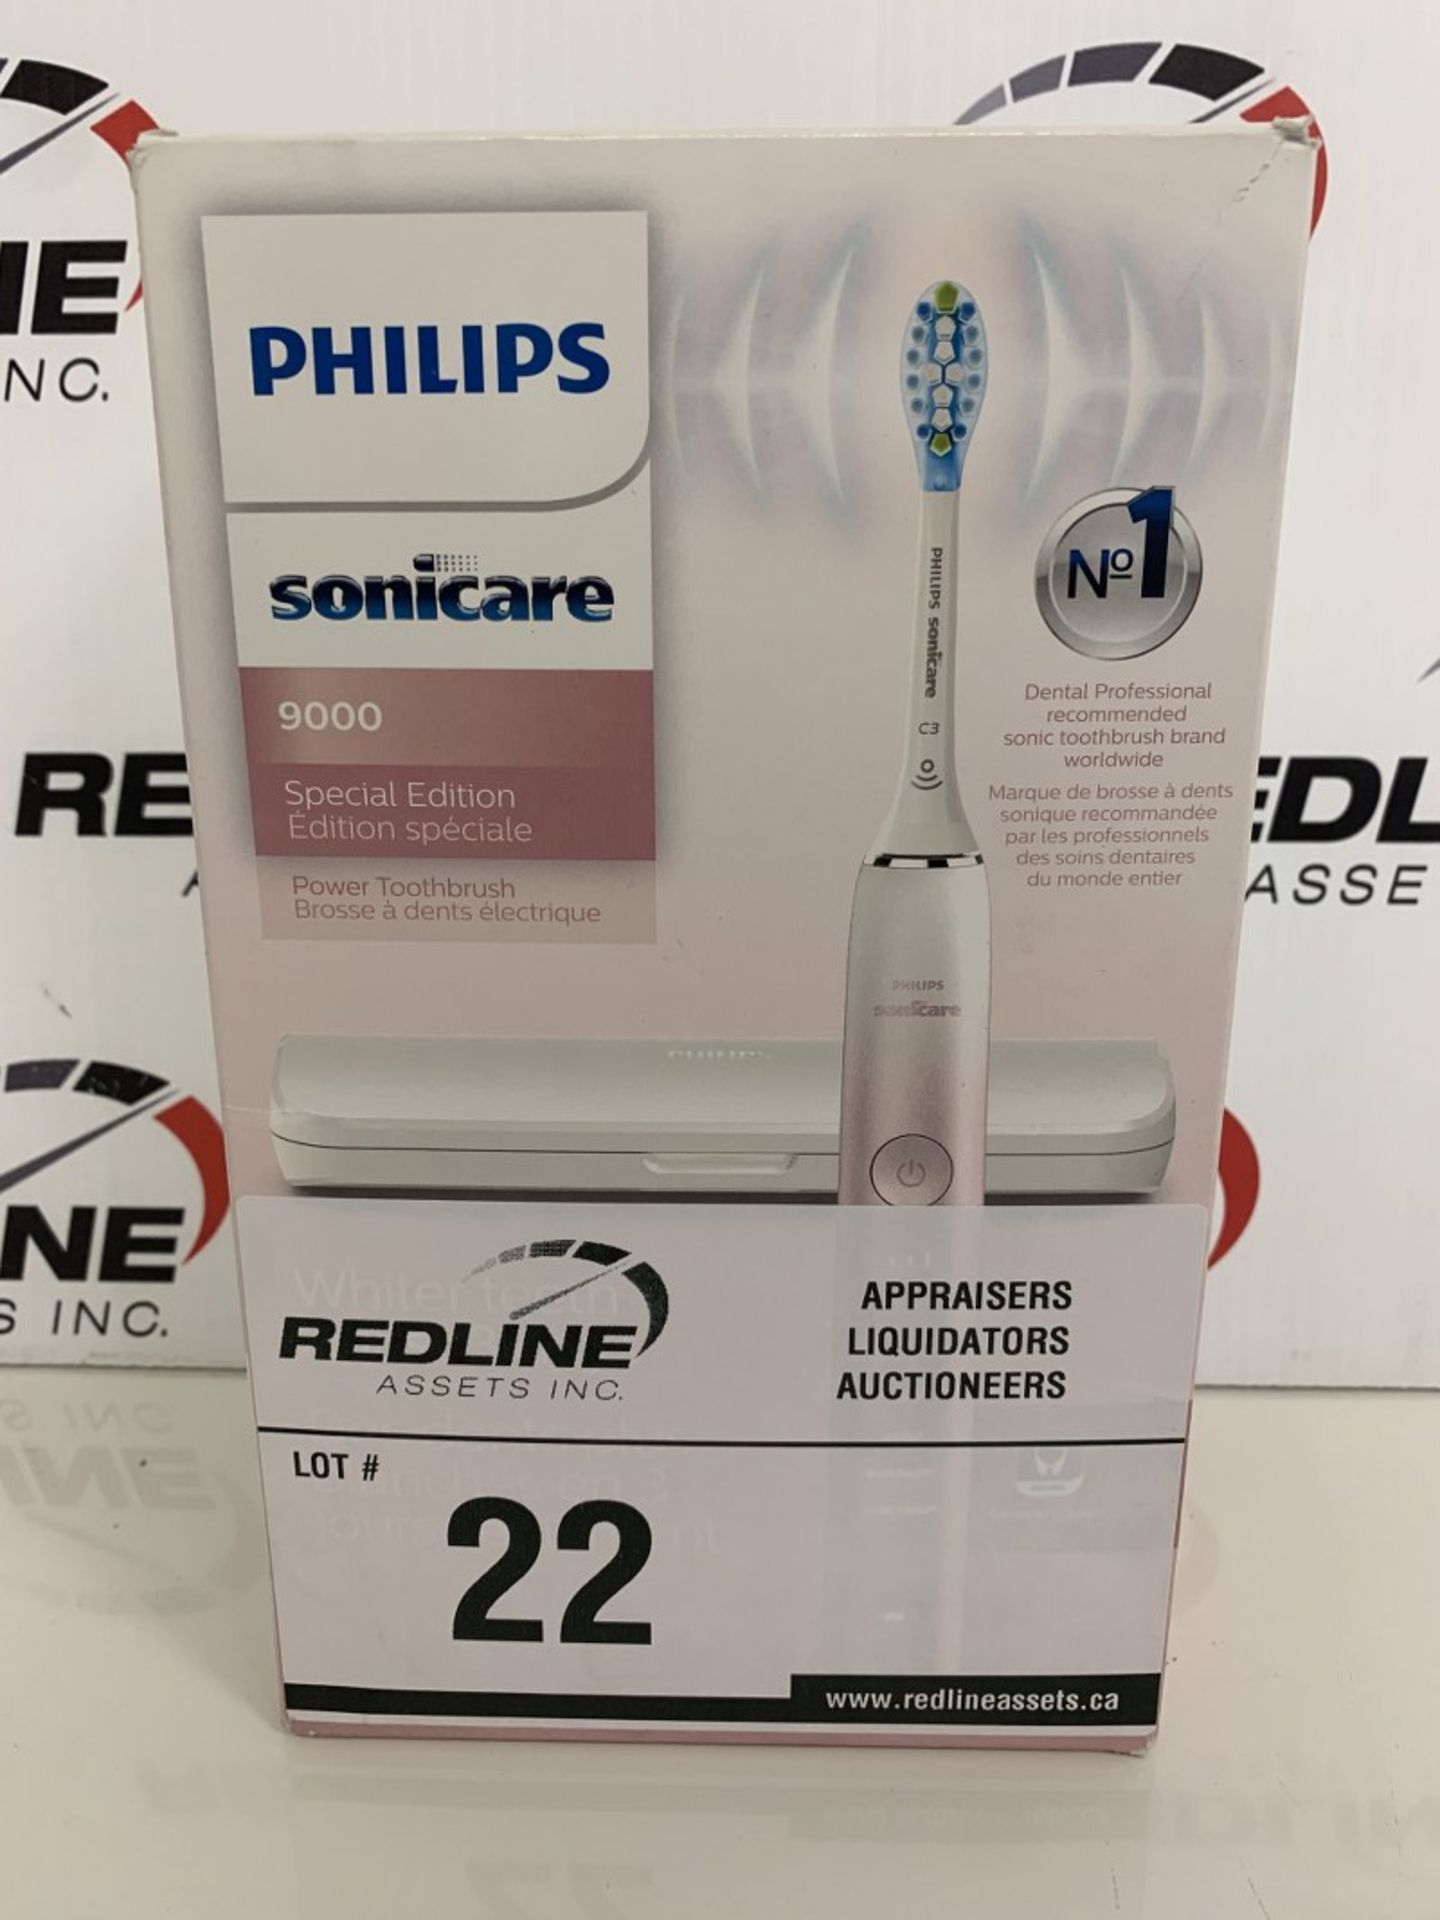 Philips - Sonicare 9000 - Power Toothbrush